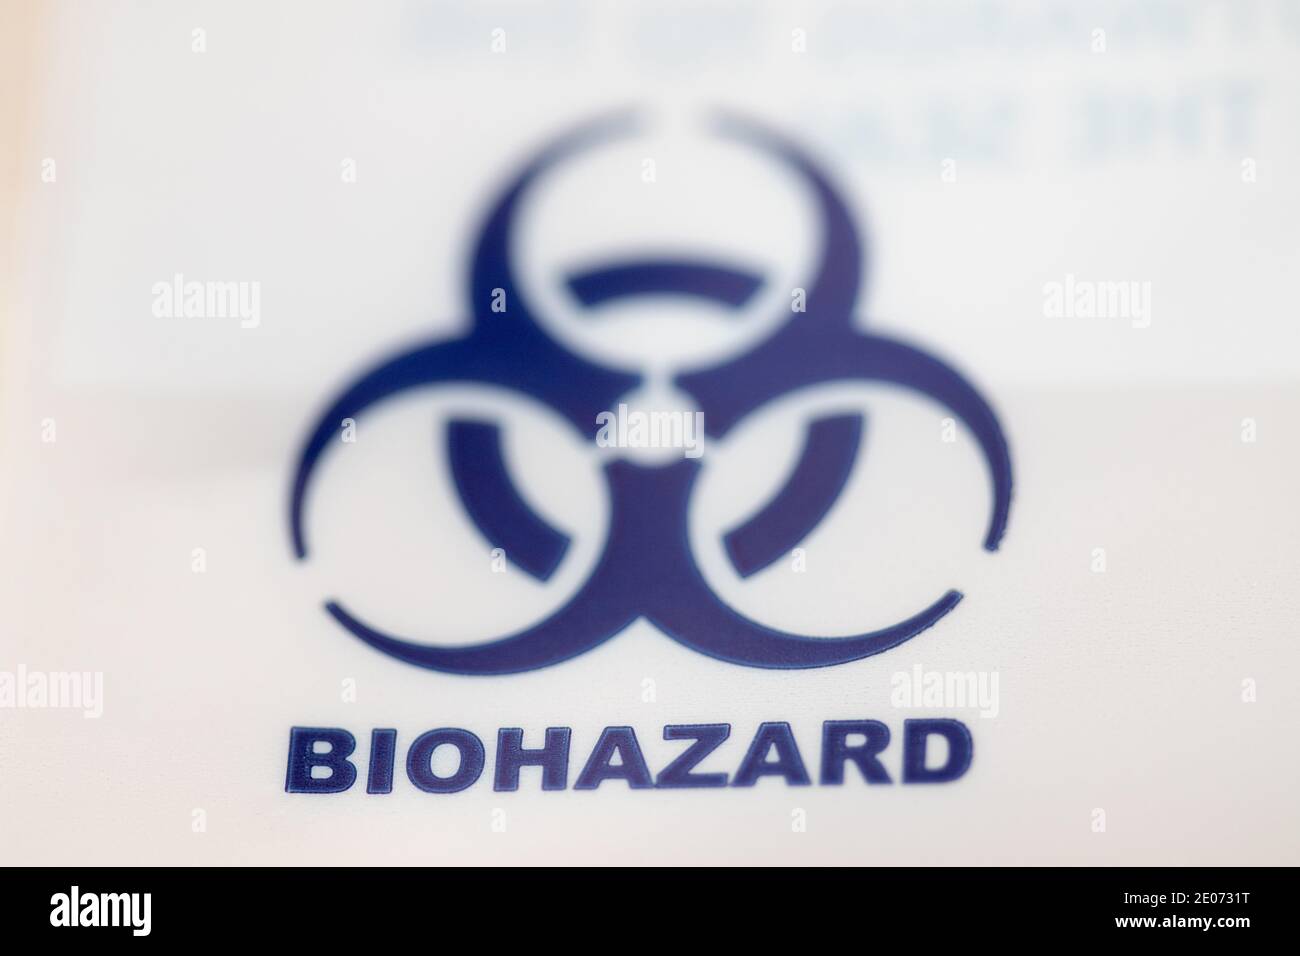 A blue biohazard symbol on a plastic bag Stock Photo